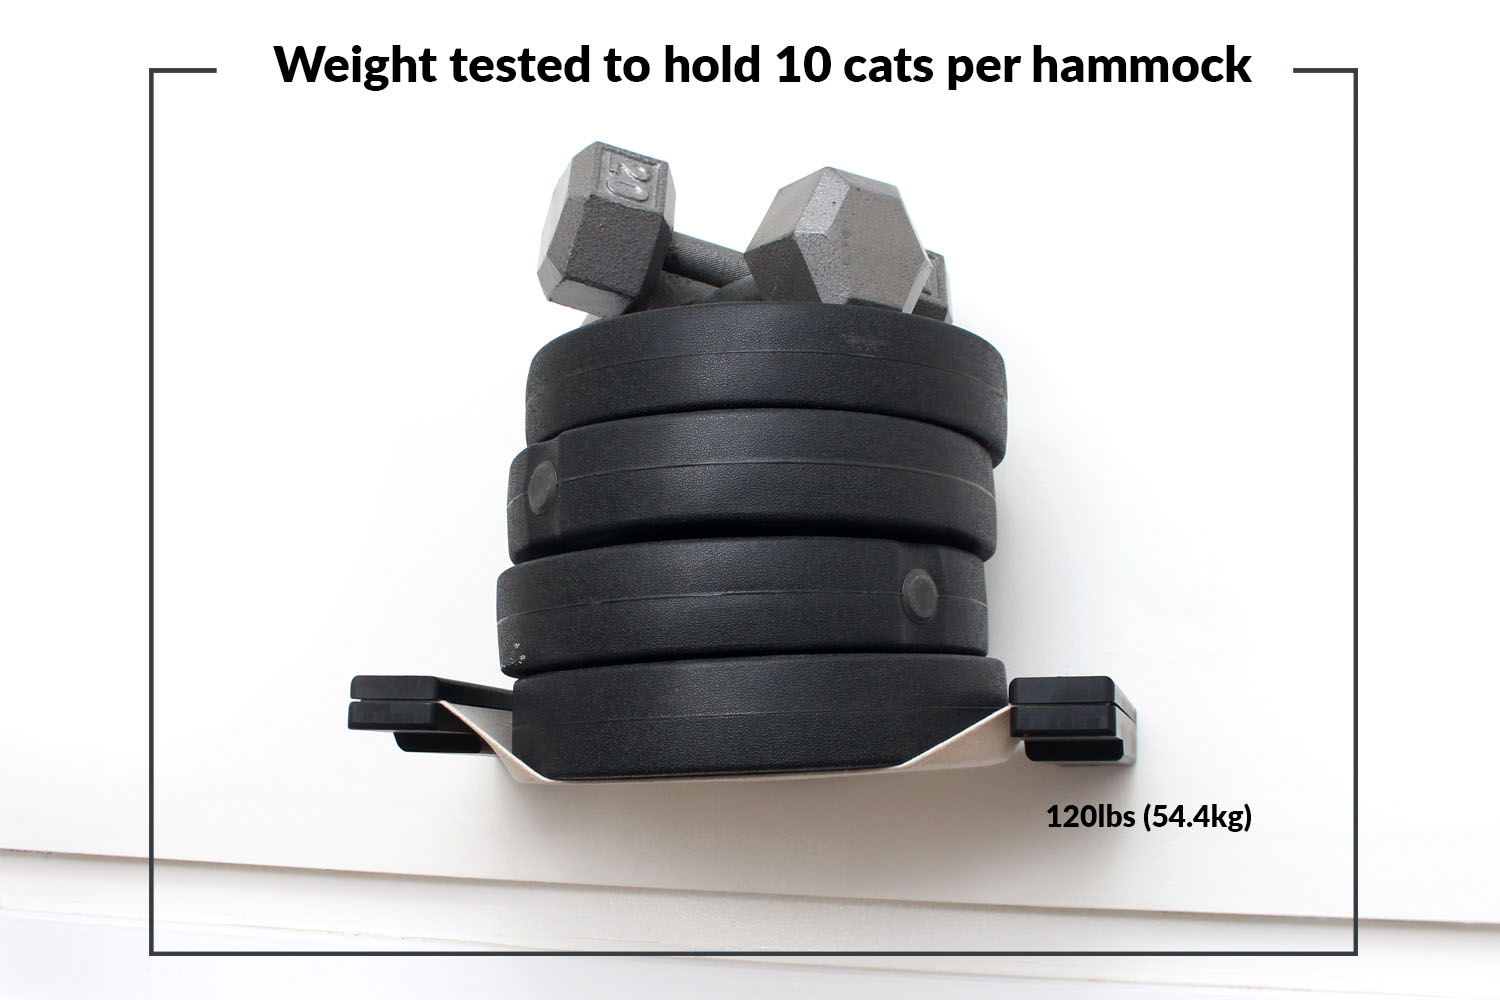 Hammock weight test photo